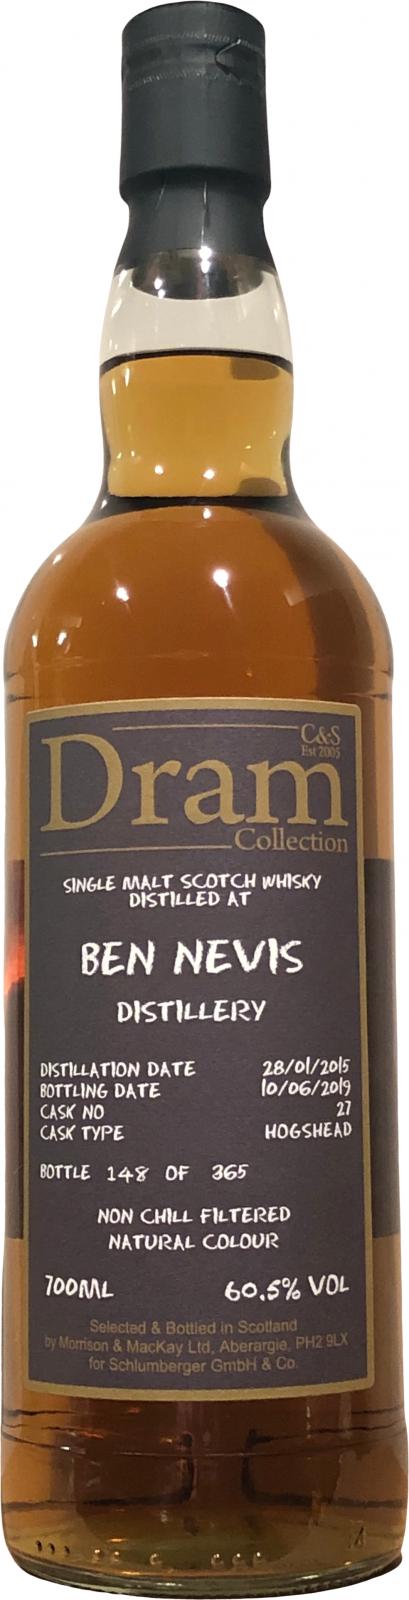 Ben Nevis 2015 MMcK C&S Dram Collection Sherry Hogshead #27 60.5% 700ml